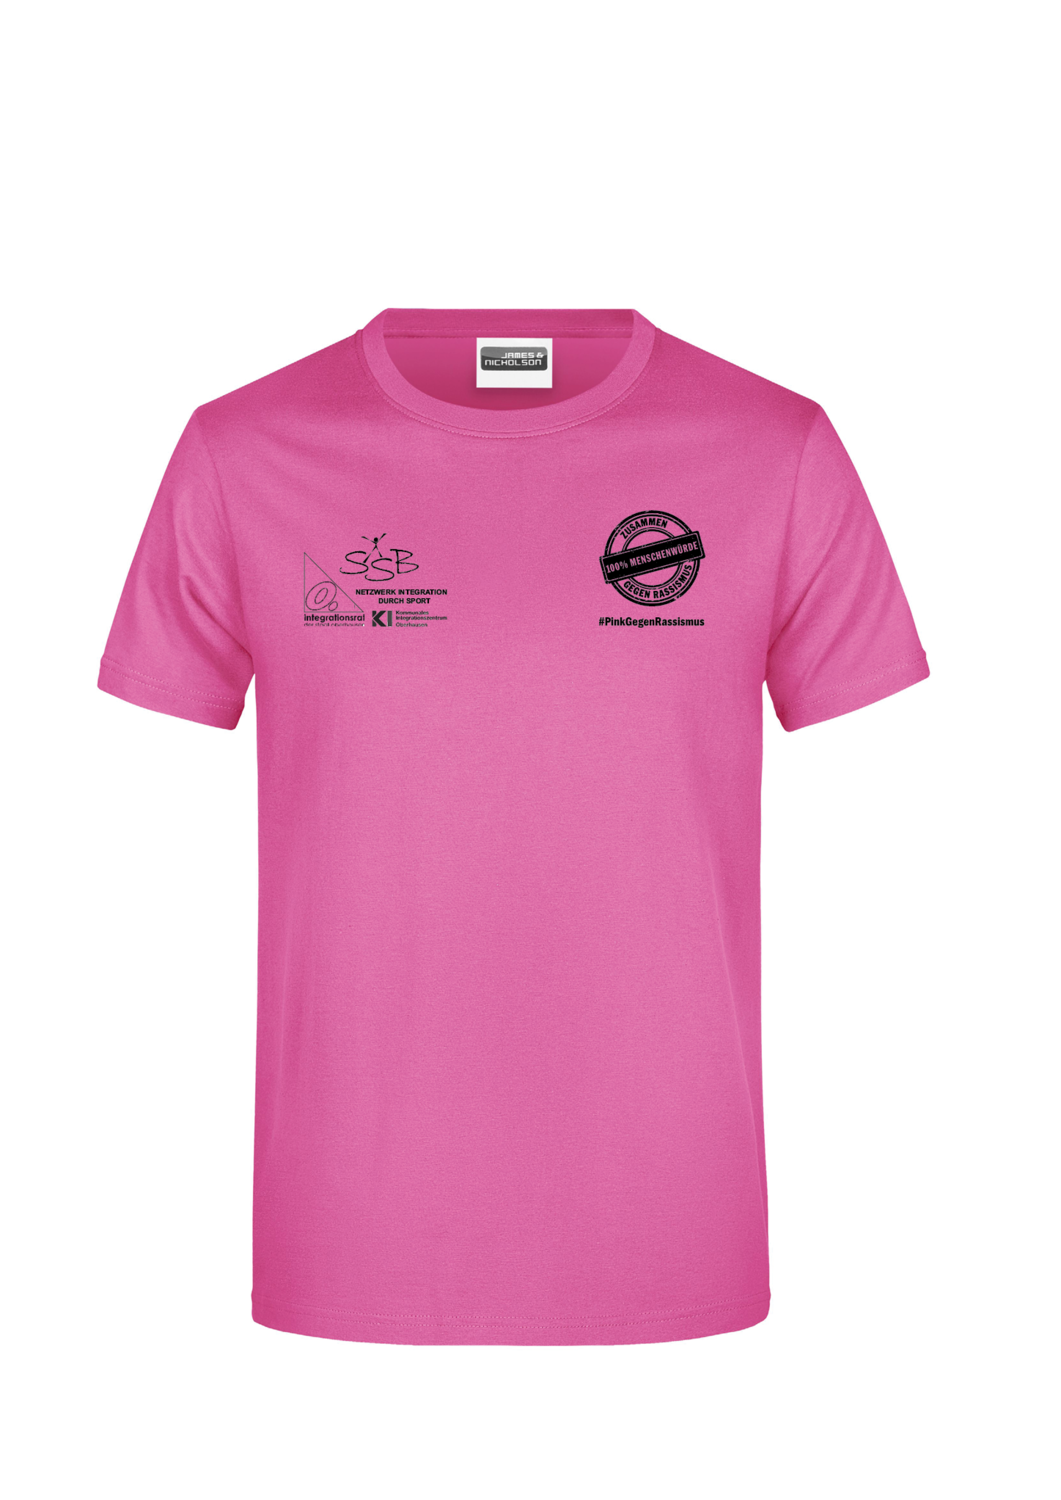 T-Shirt zur Aktion #PinkGegenRassismus